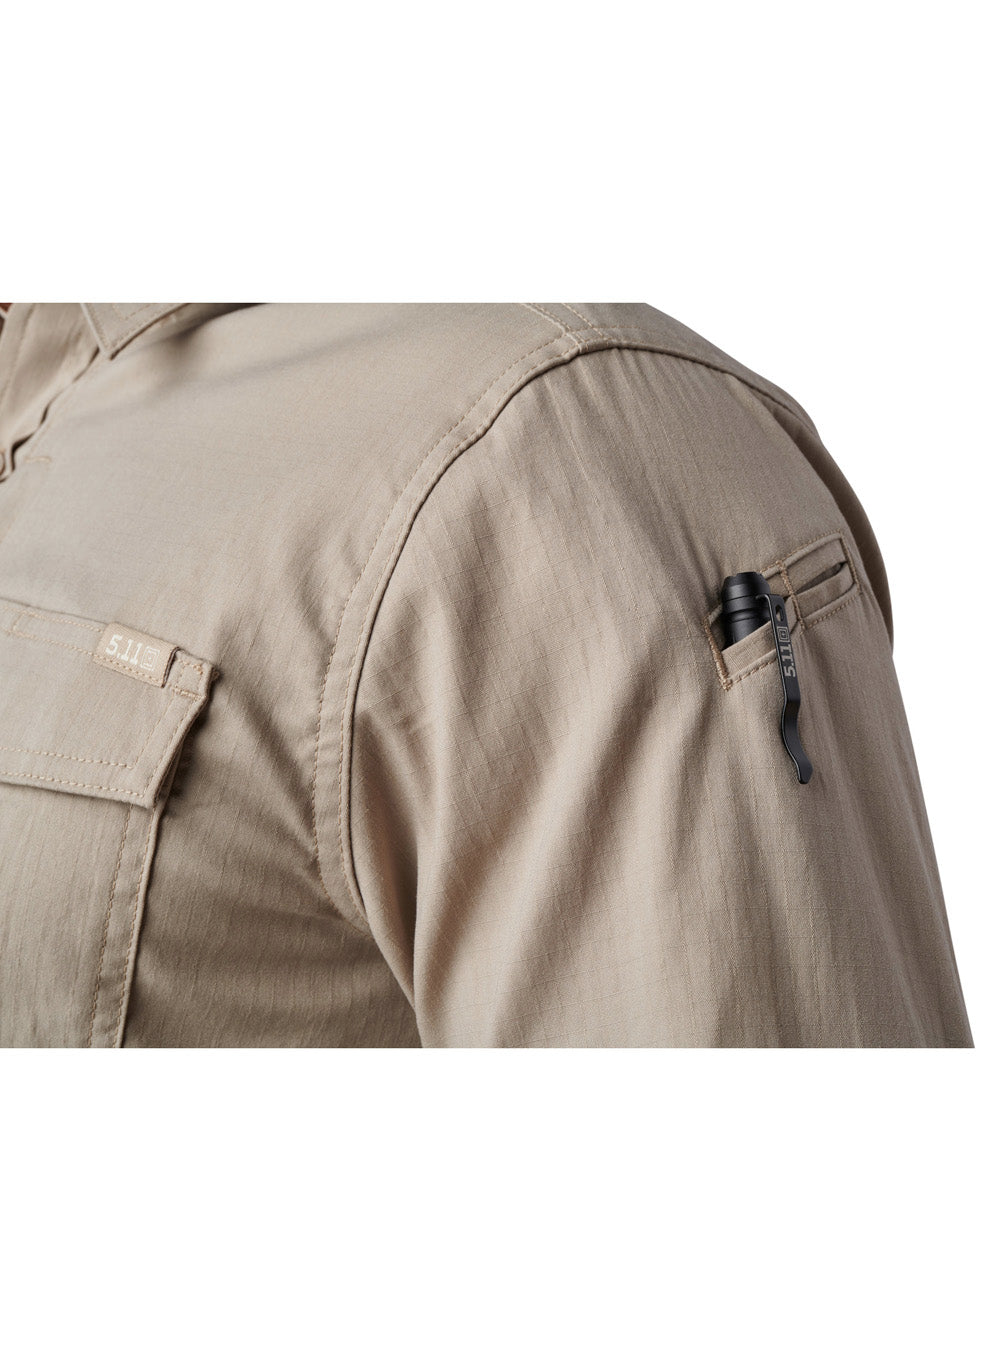 5.11 Tactical ABR Pro L/S Shirt - Khaki - TacSource